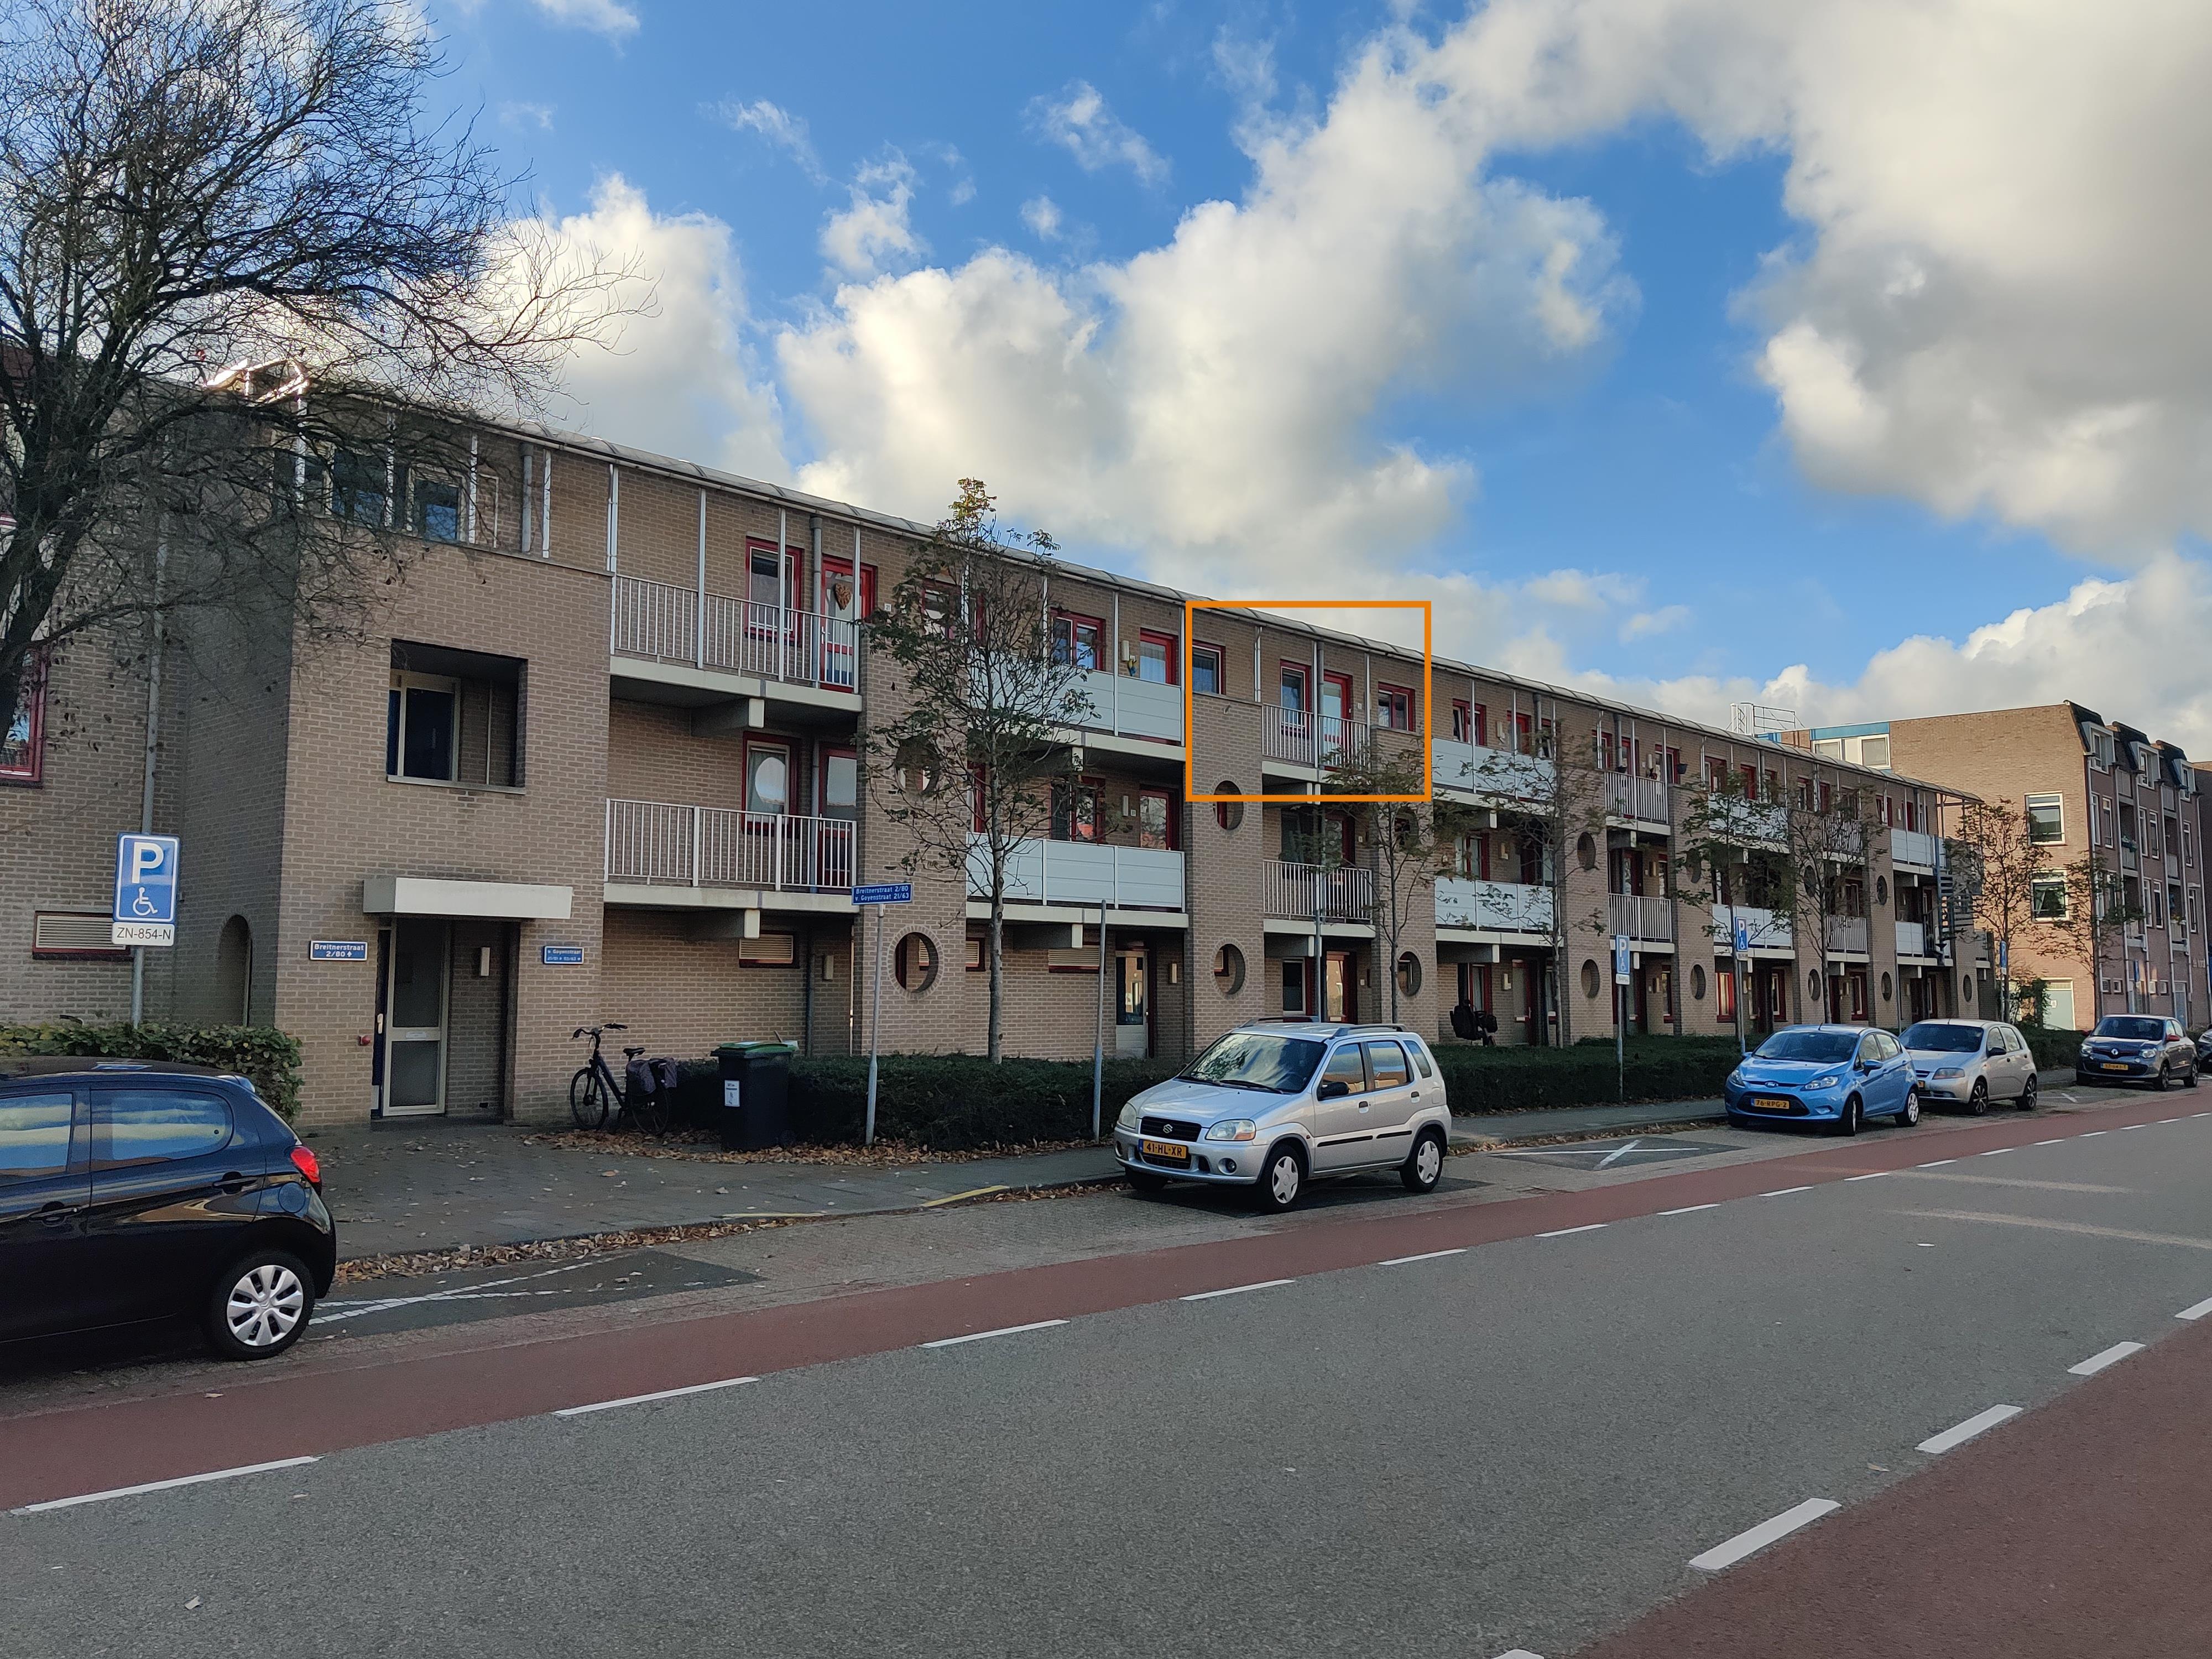 Van Goyenstraat 21, 6921 LH Duiven, Nederland